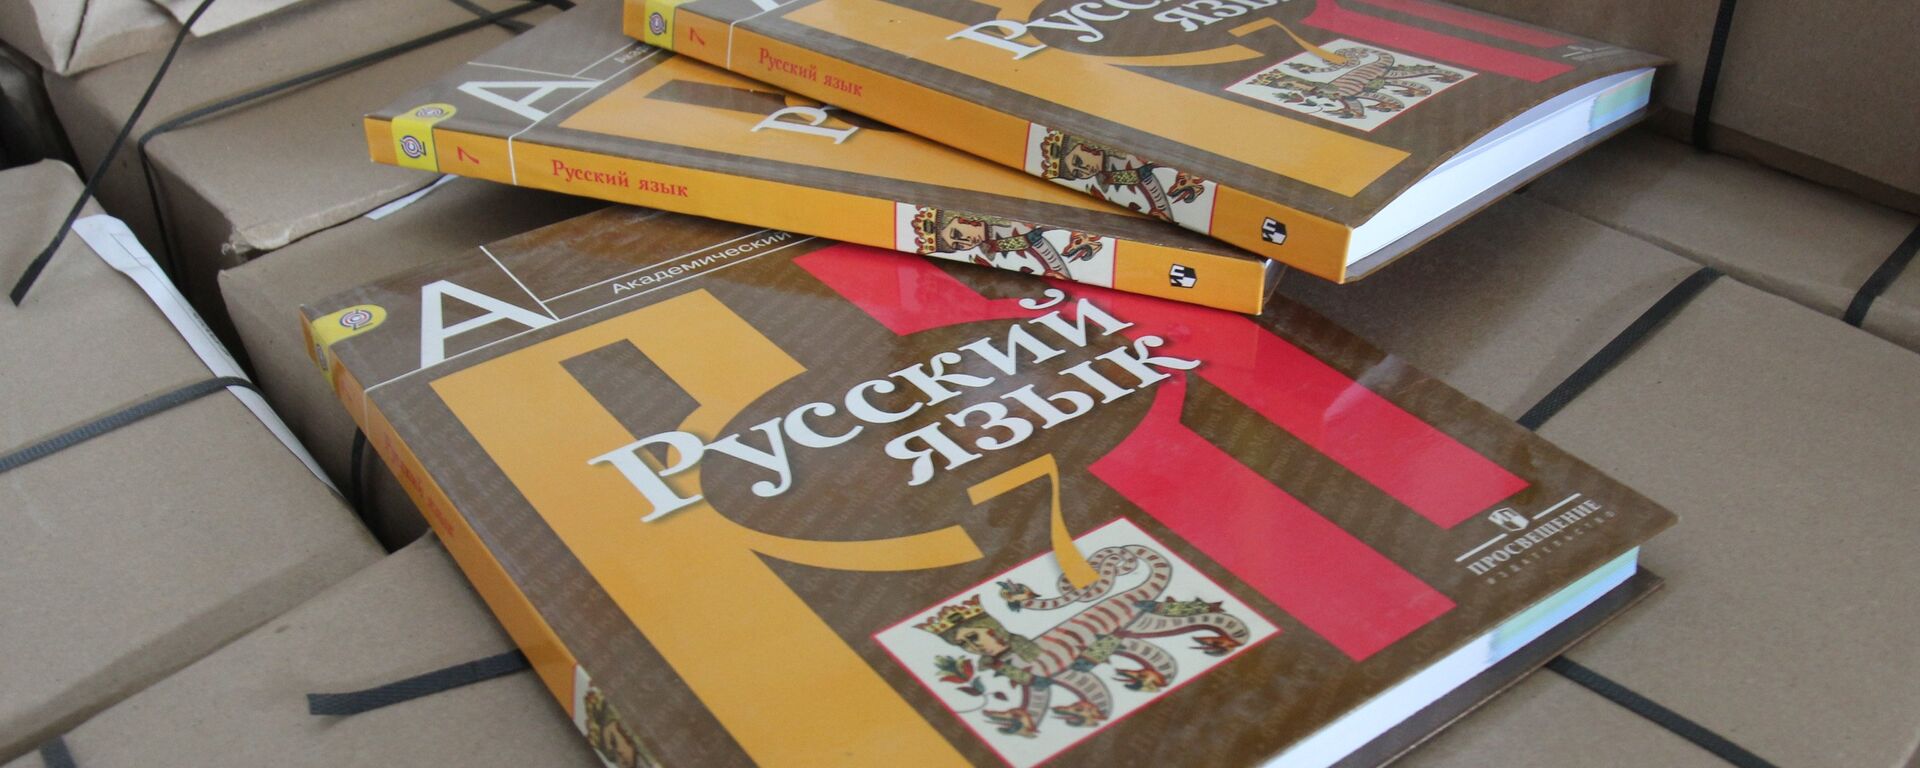 Textbooks on the Russian language. (File) - Sputnik Молдова, 1920, 13.05.2021